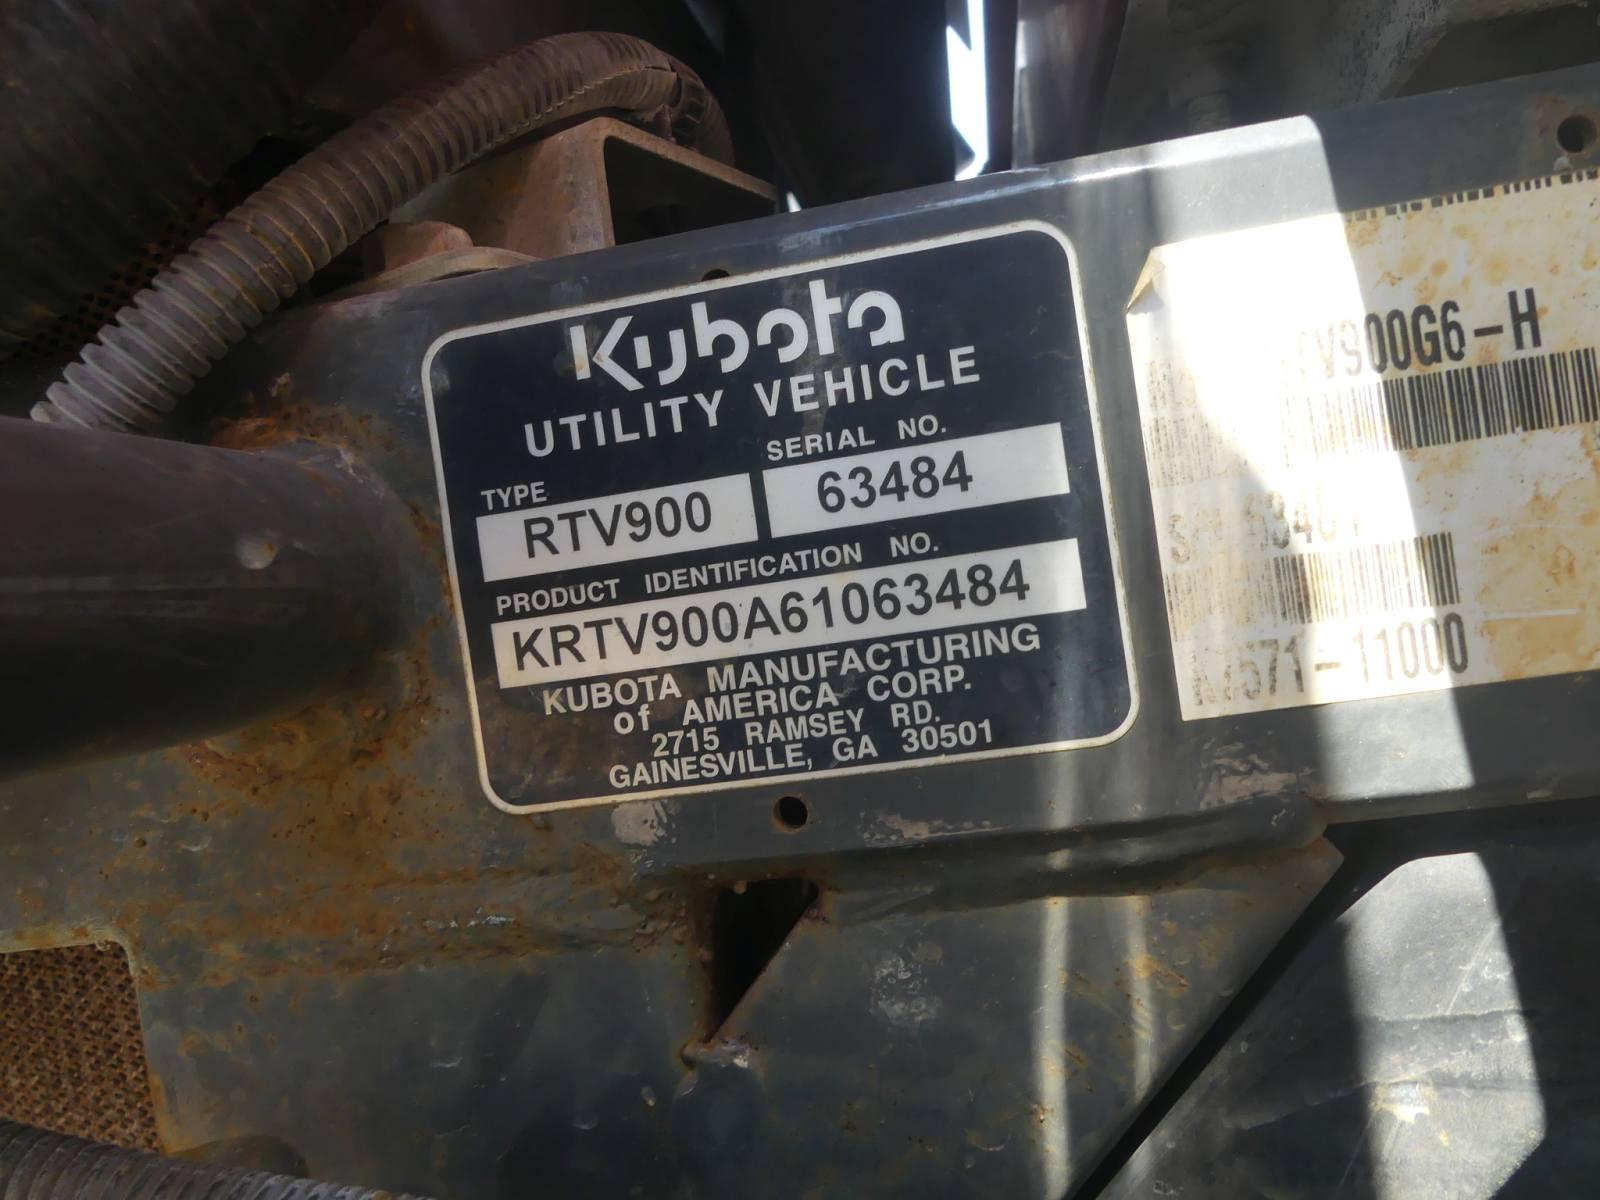 Kubota RTV900 4WD Utility Vehicle, s/n KRTV900A61063484 (Salvage - No Title